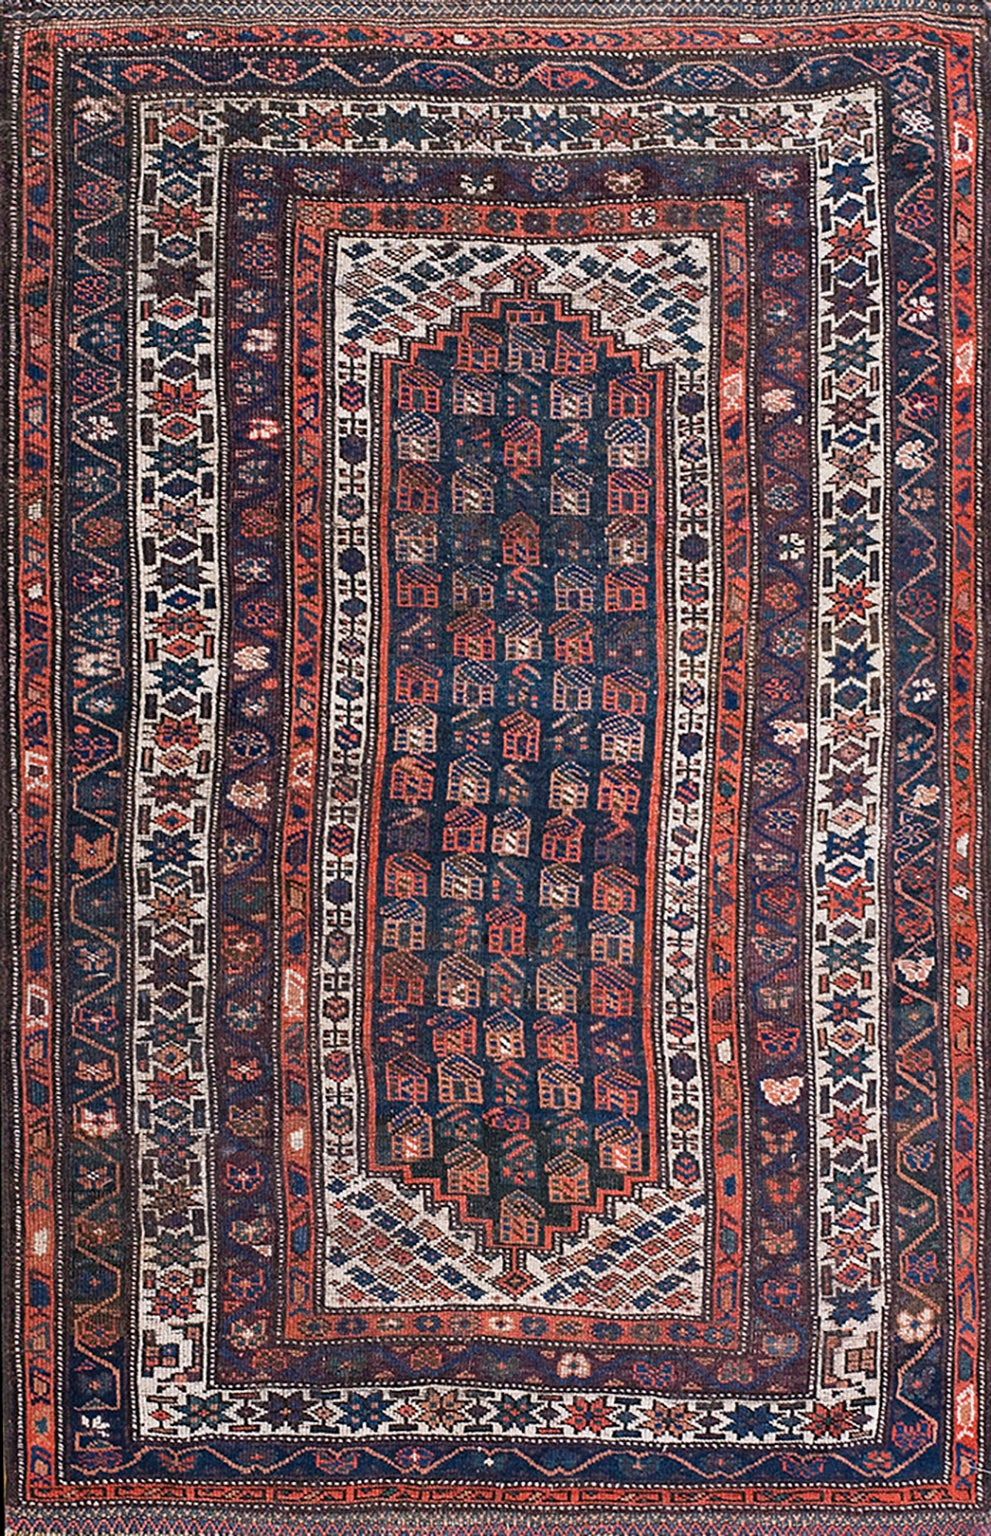 Early 20th Century W. Persian Kurdish Carpet ( 4'6" x 6'9" - 137 x 206 ) For Sale